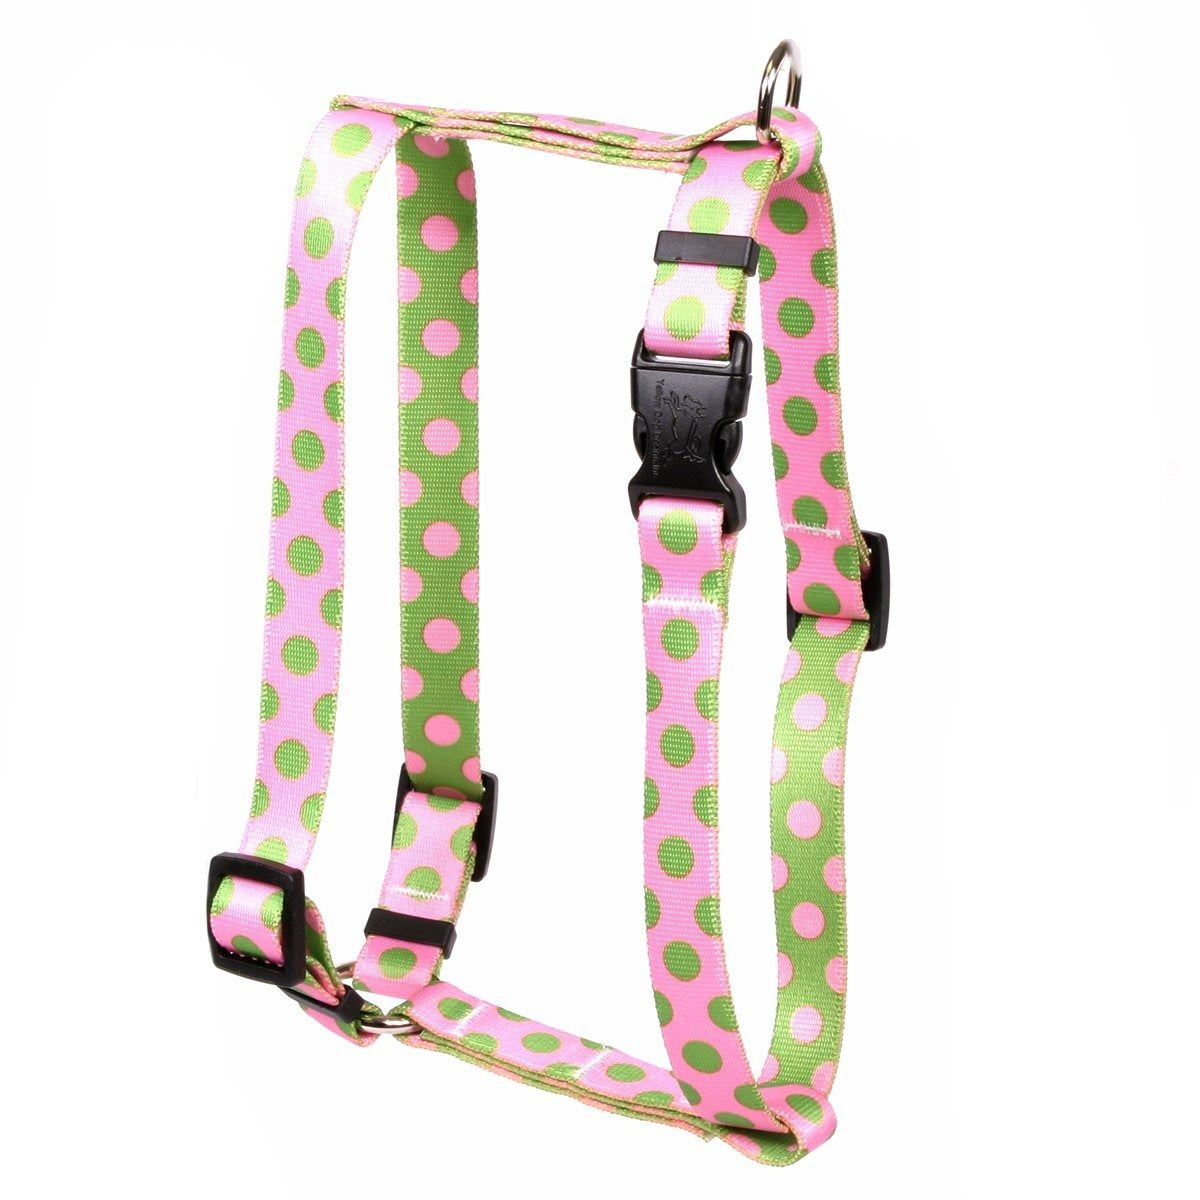 Yellow Dog Design - Roman Dog Harness, Pink & Green Polka Dot